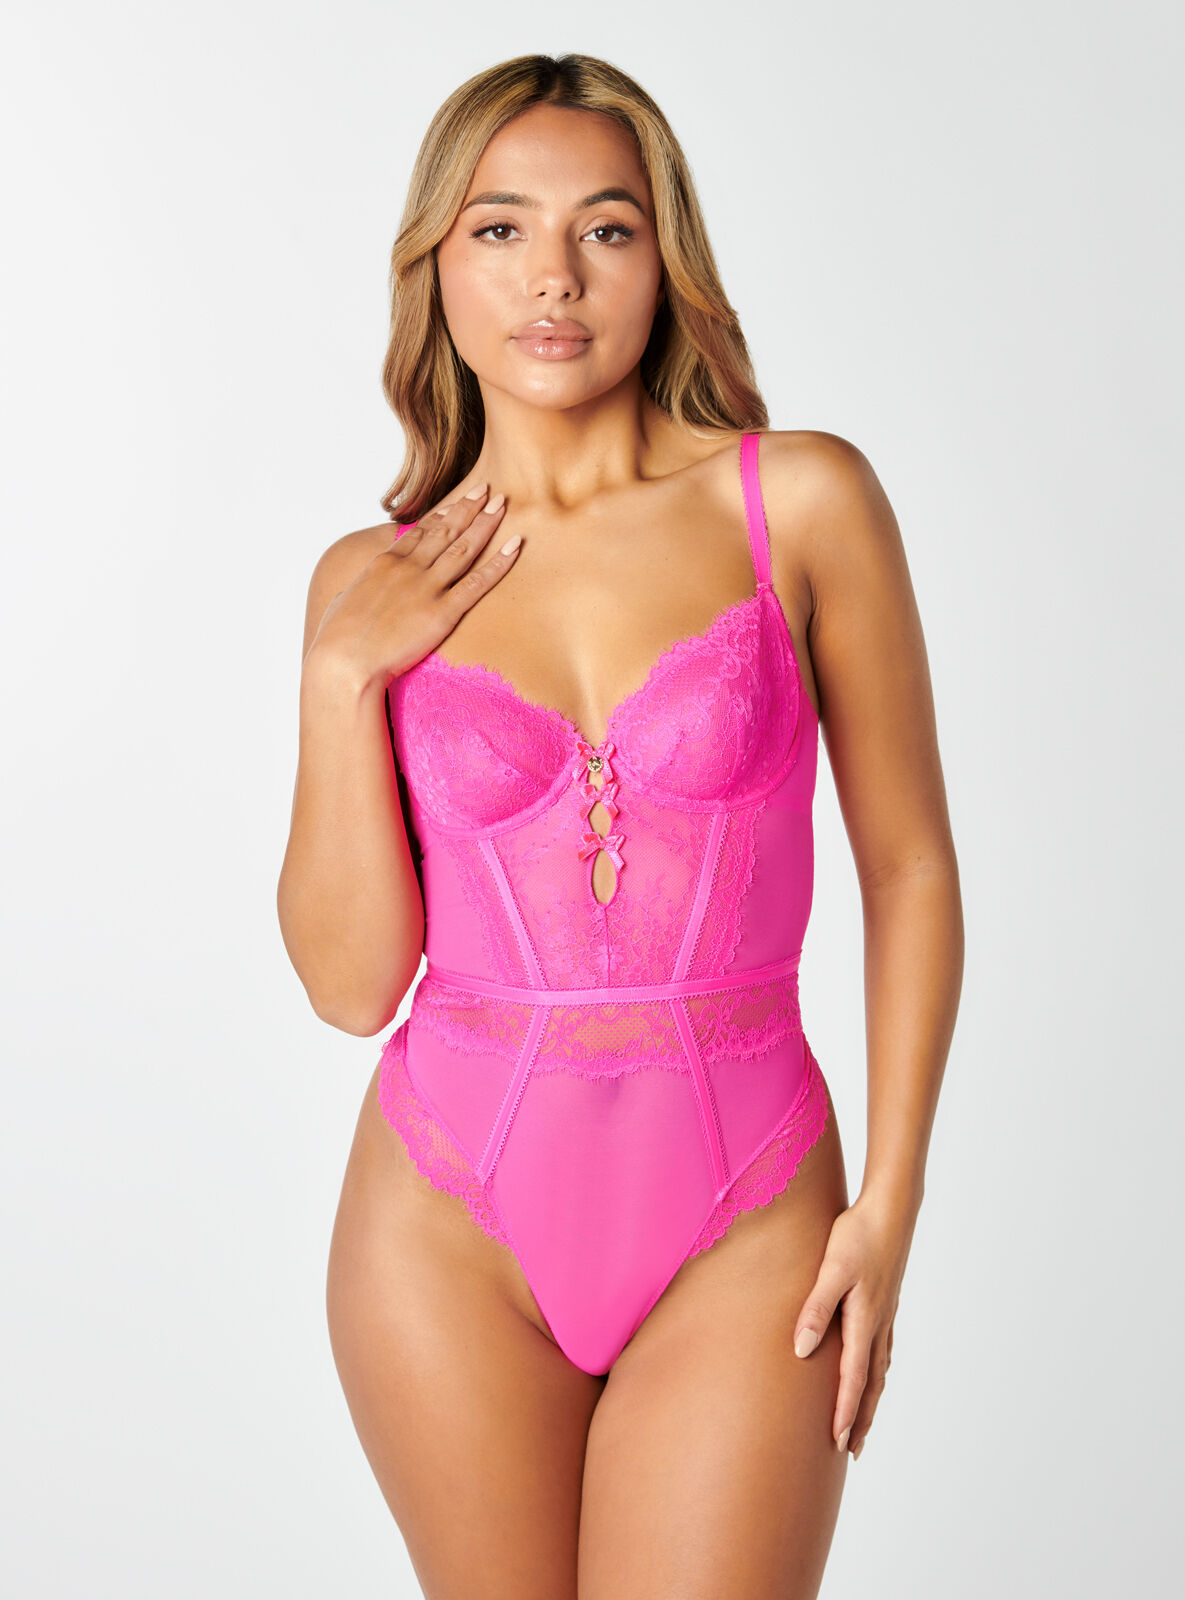 Boux Avenue Aubree body - Hot Pink - 32D